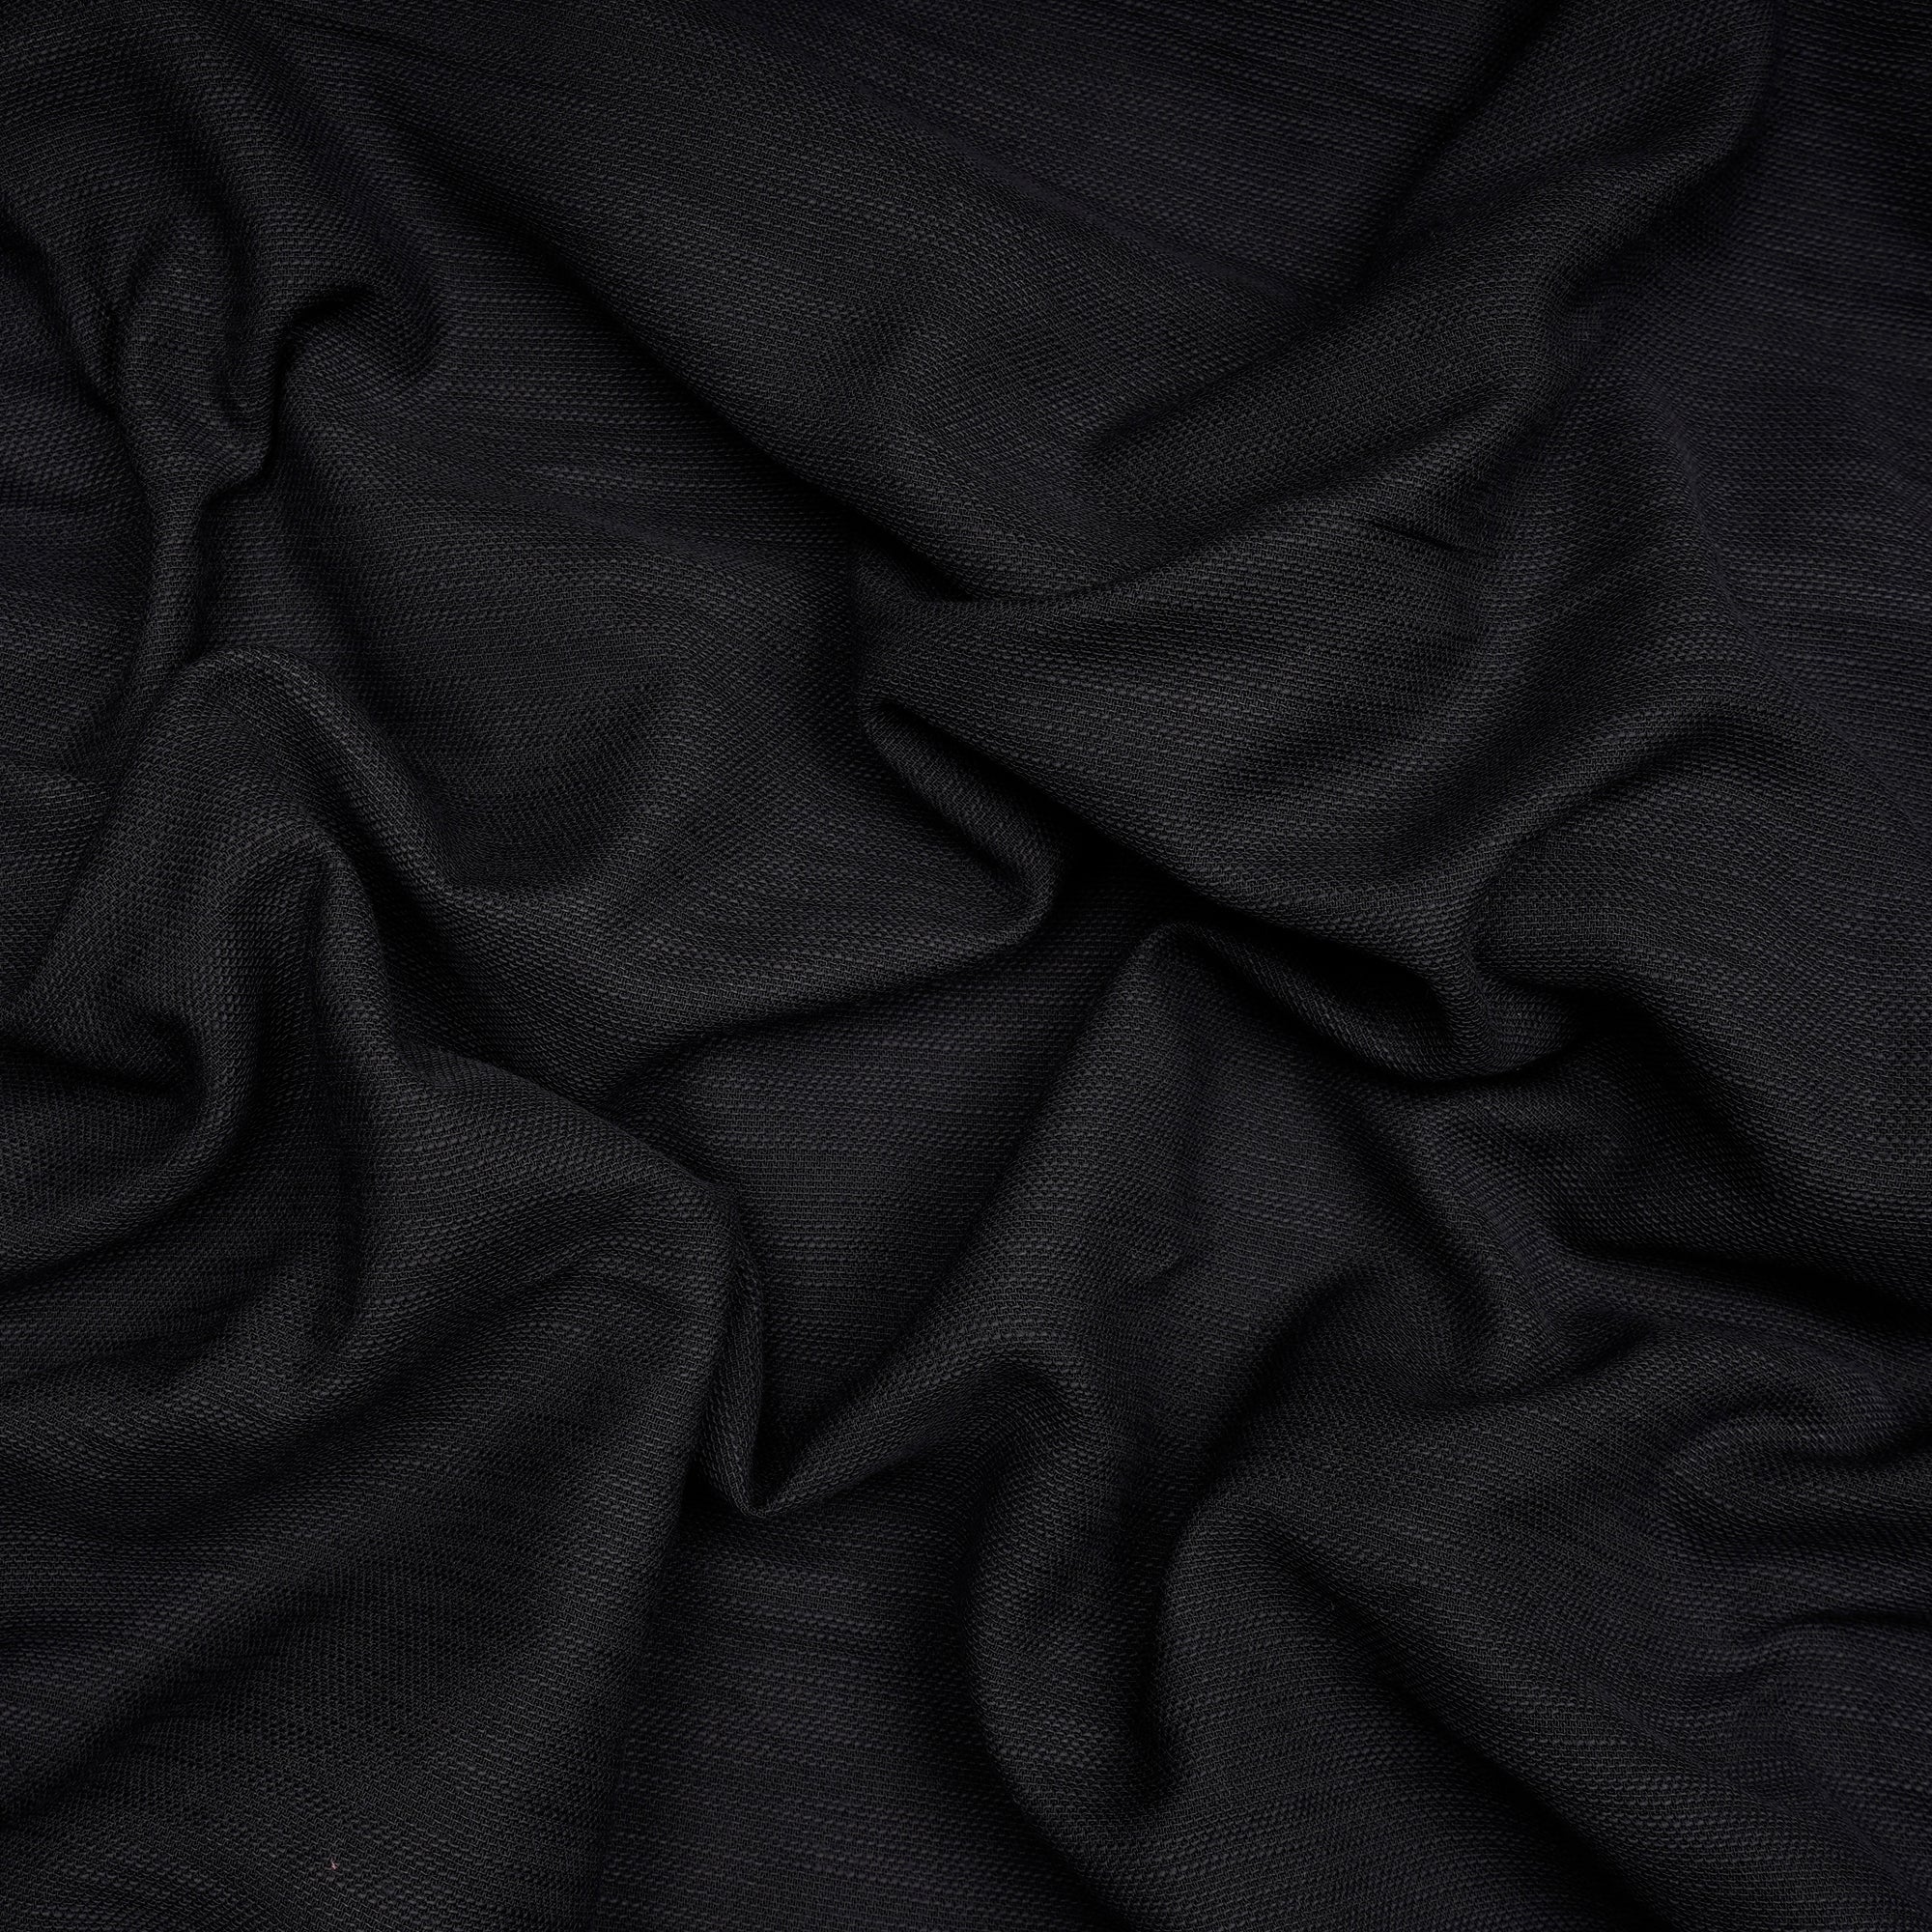 Black Color Slub Viscose Cotton Fabric